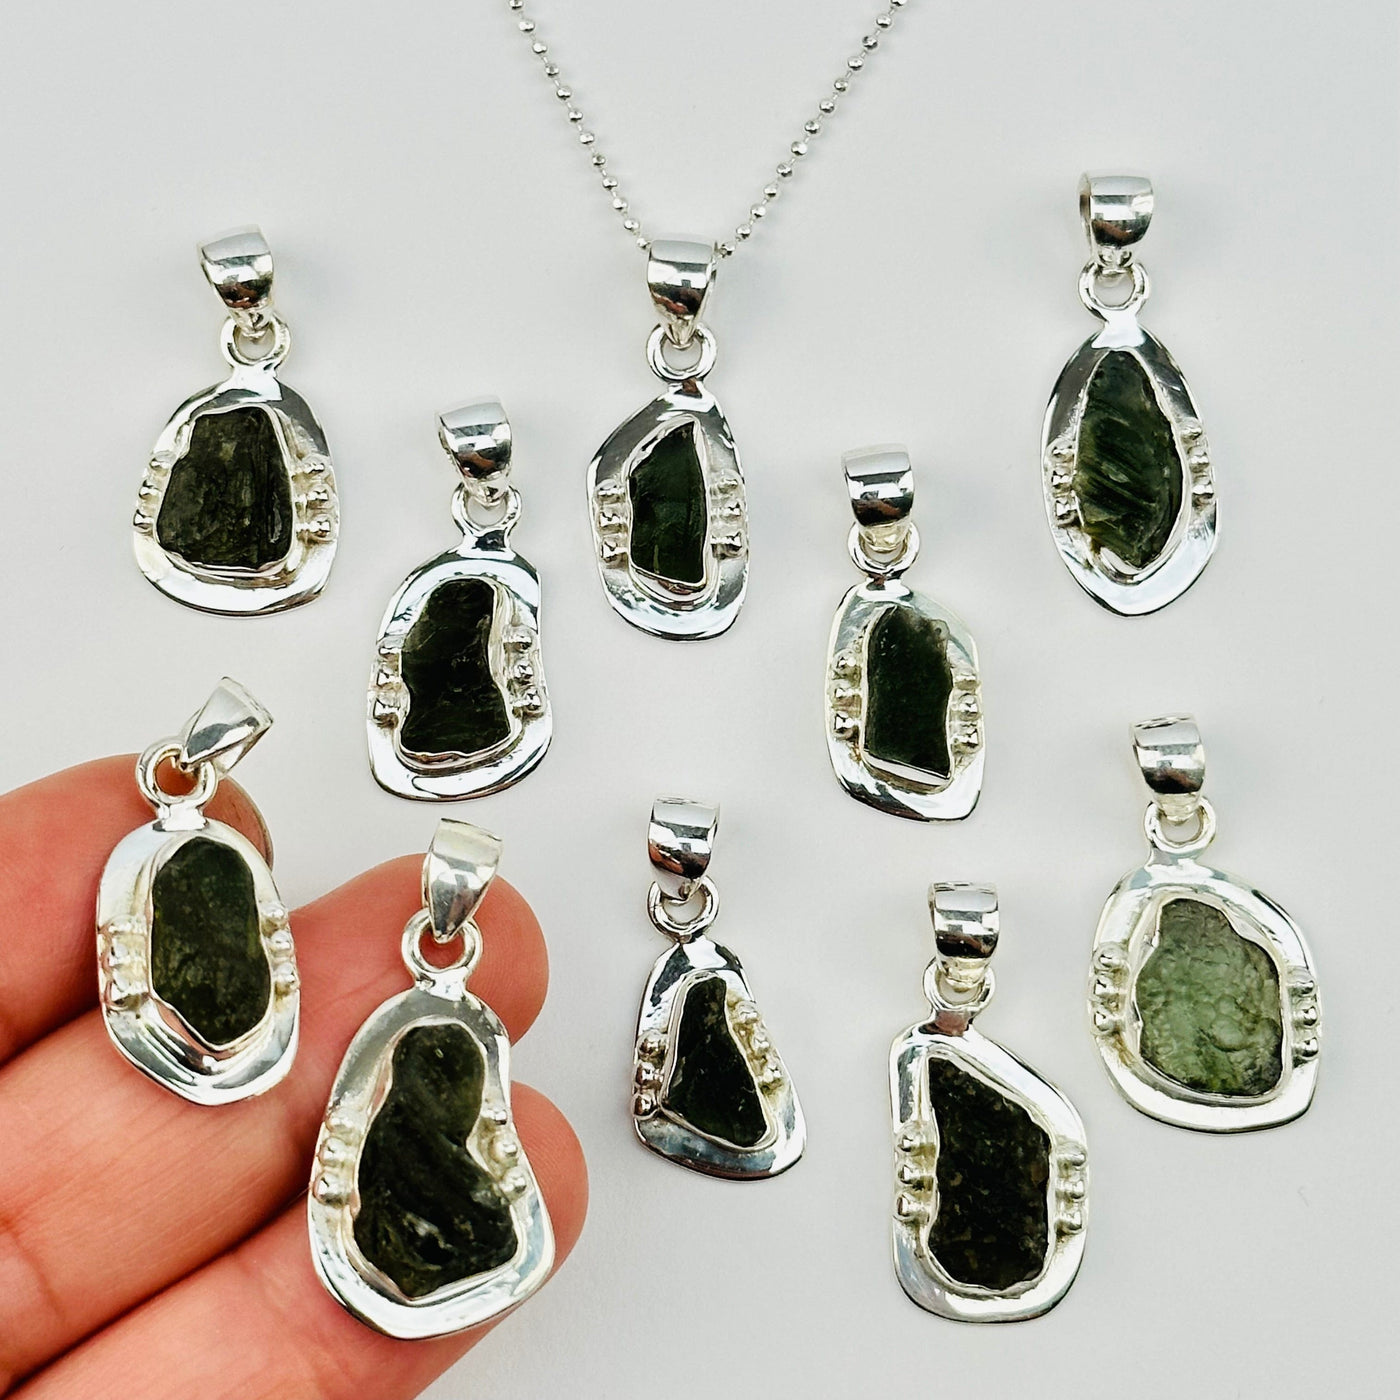 moldavite pendants in hand for size reference 